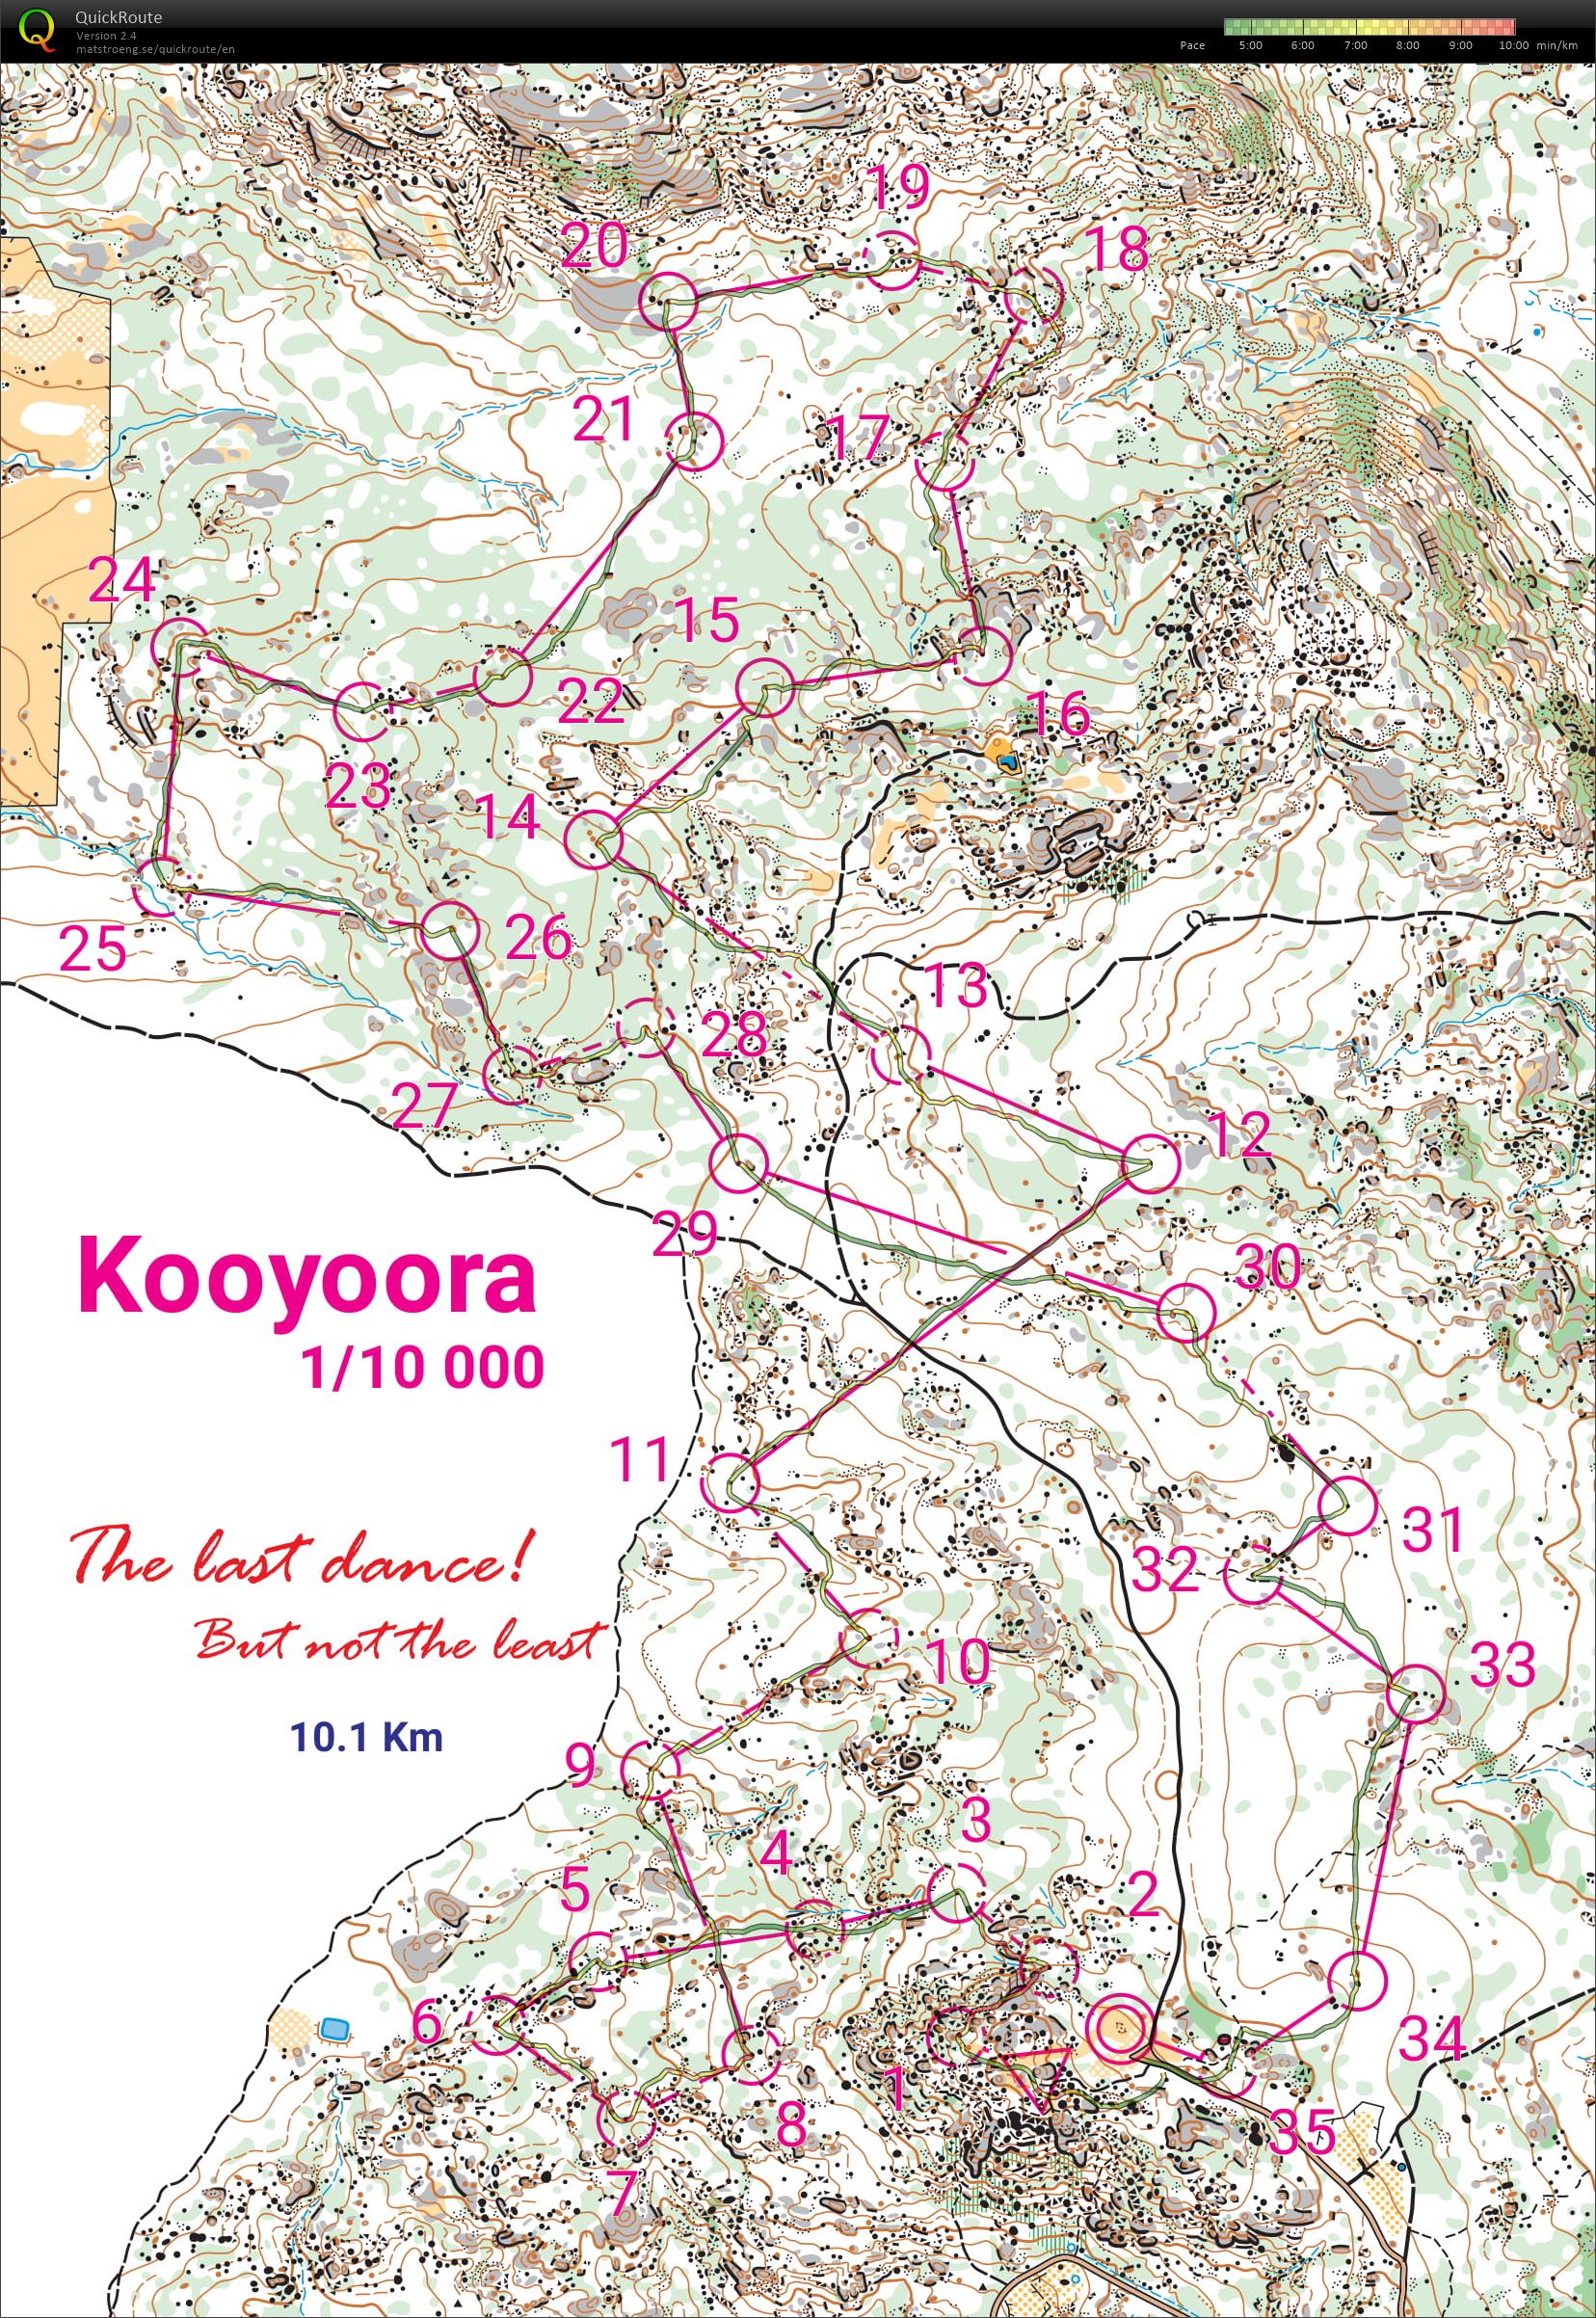 Kooyoora easy training (26-06-2020)